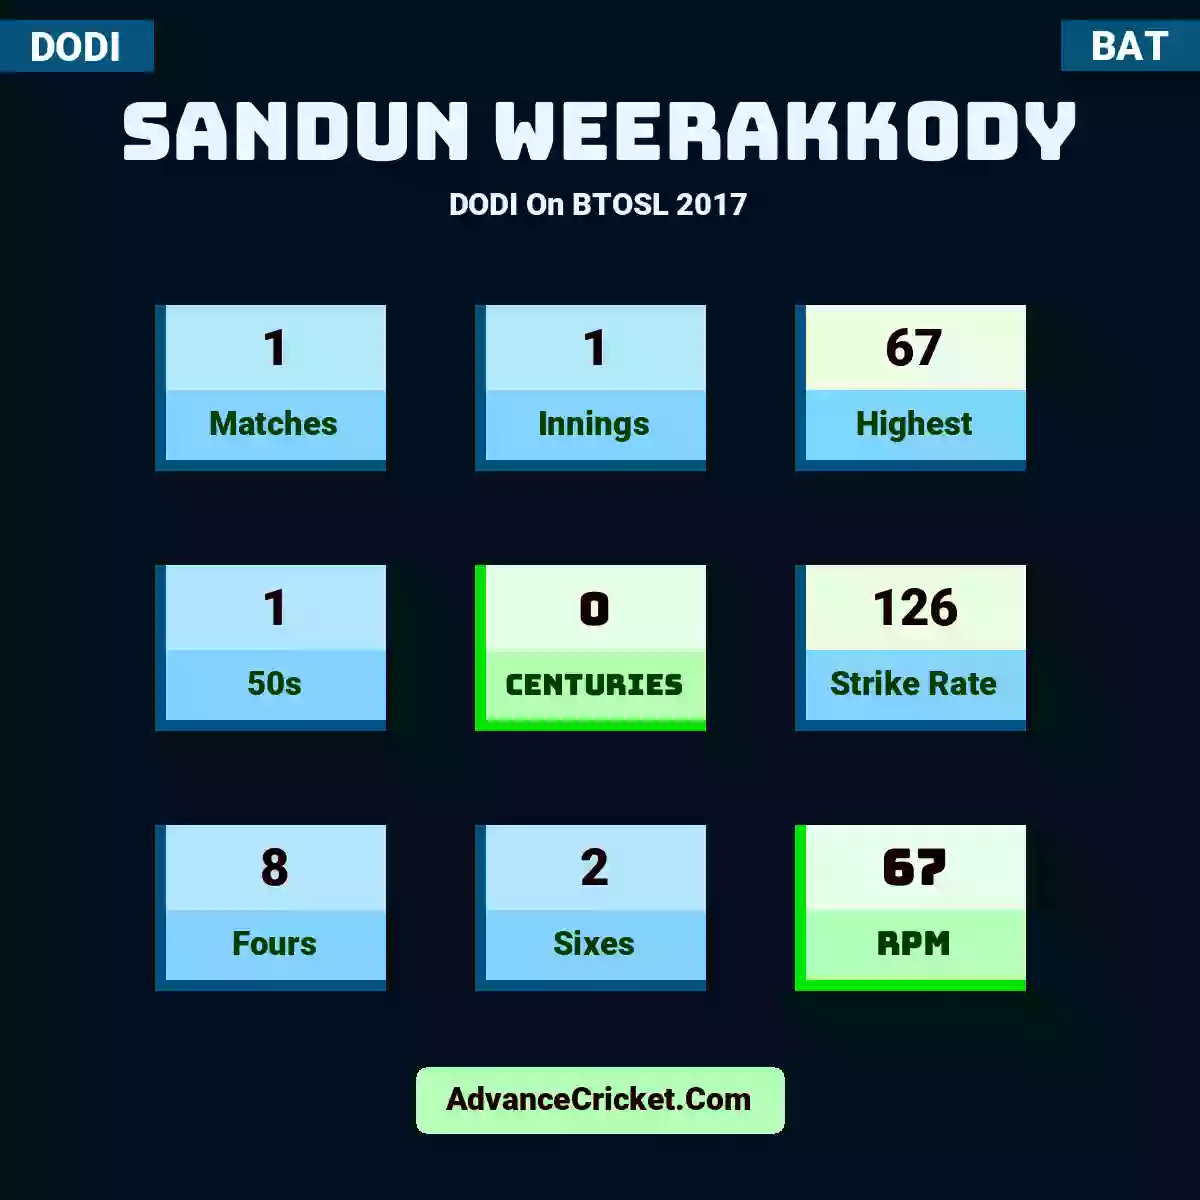 Sandun Weerakkody DODI  On BTOSL 2017, Sandun Weerakkody played 1 matches, scored 67 runs as highest, 1 half-centuries, and 0 centuries, with a strike rate of 126. S.Weerakkody hit 8 fours and 2 sixes, with an RPM of 67.